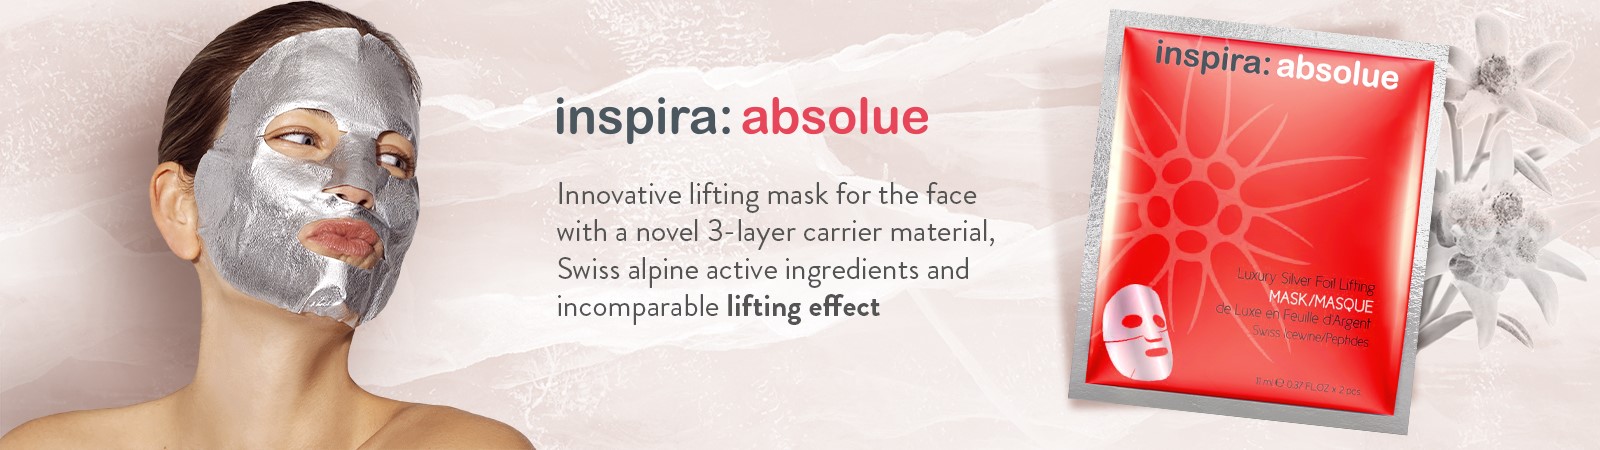 Inspira Absolue silver foil mask